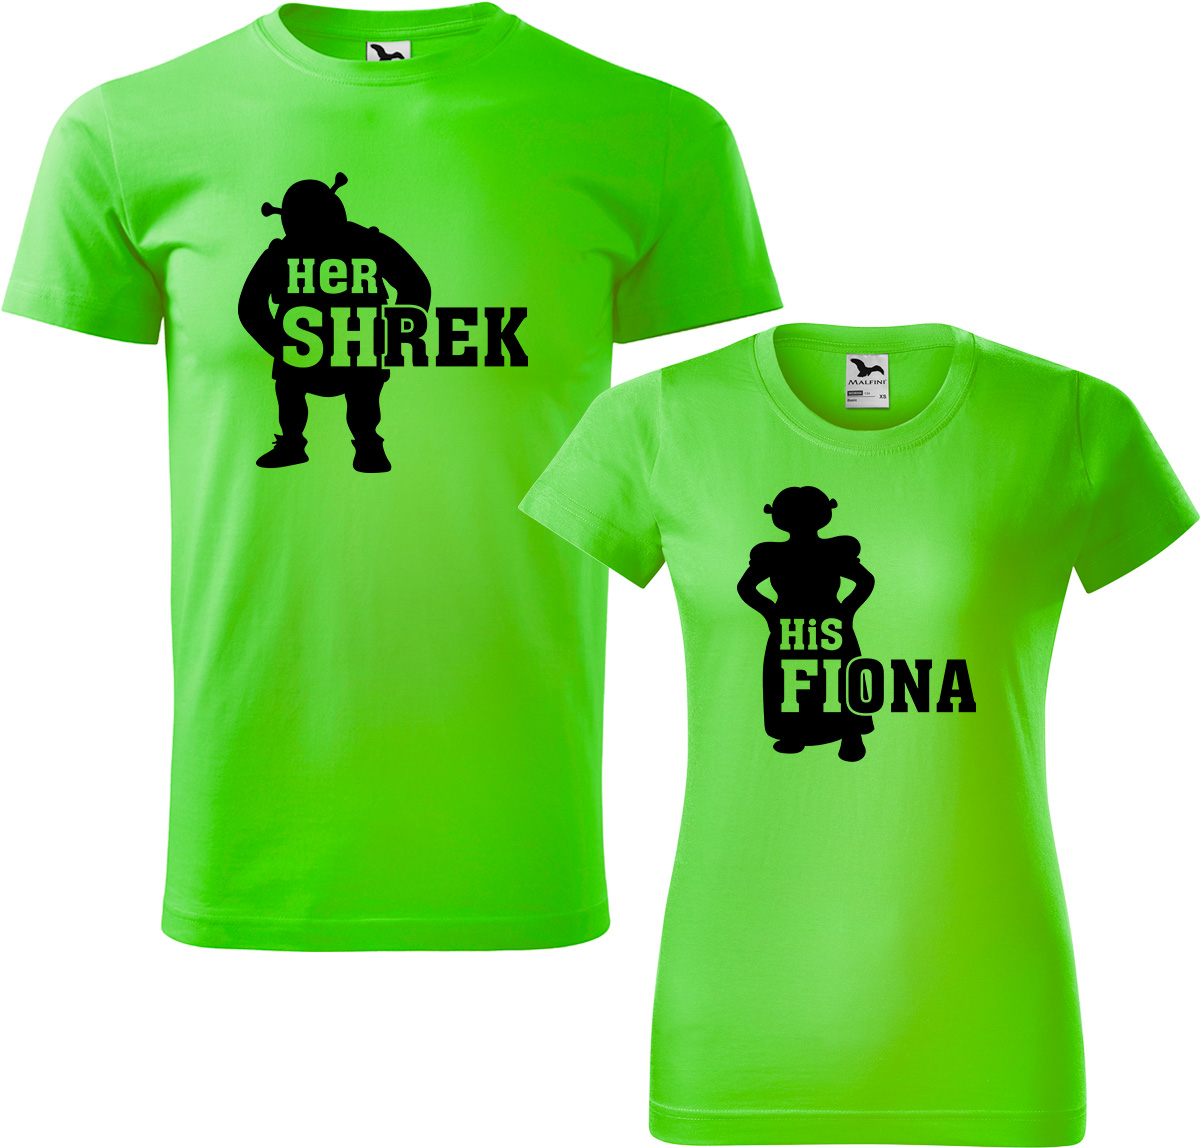 Trička pro páry - Shrek a Fiona Barva: Apple Green (92), Velikost dámské tričko: 3XL, Velikost pánské tričko: 4XL